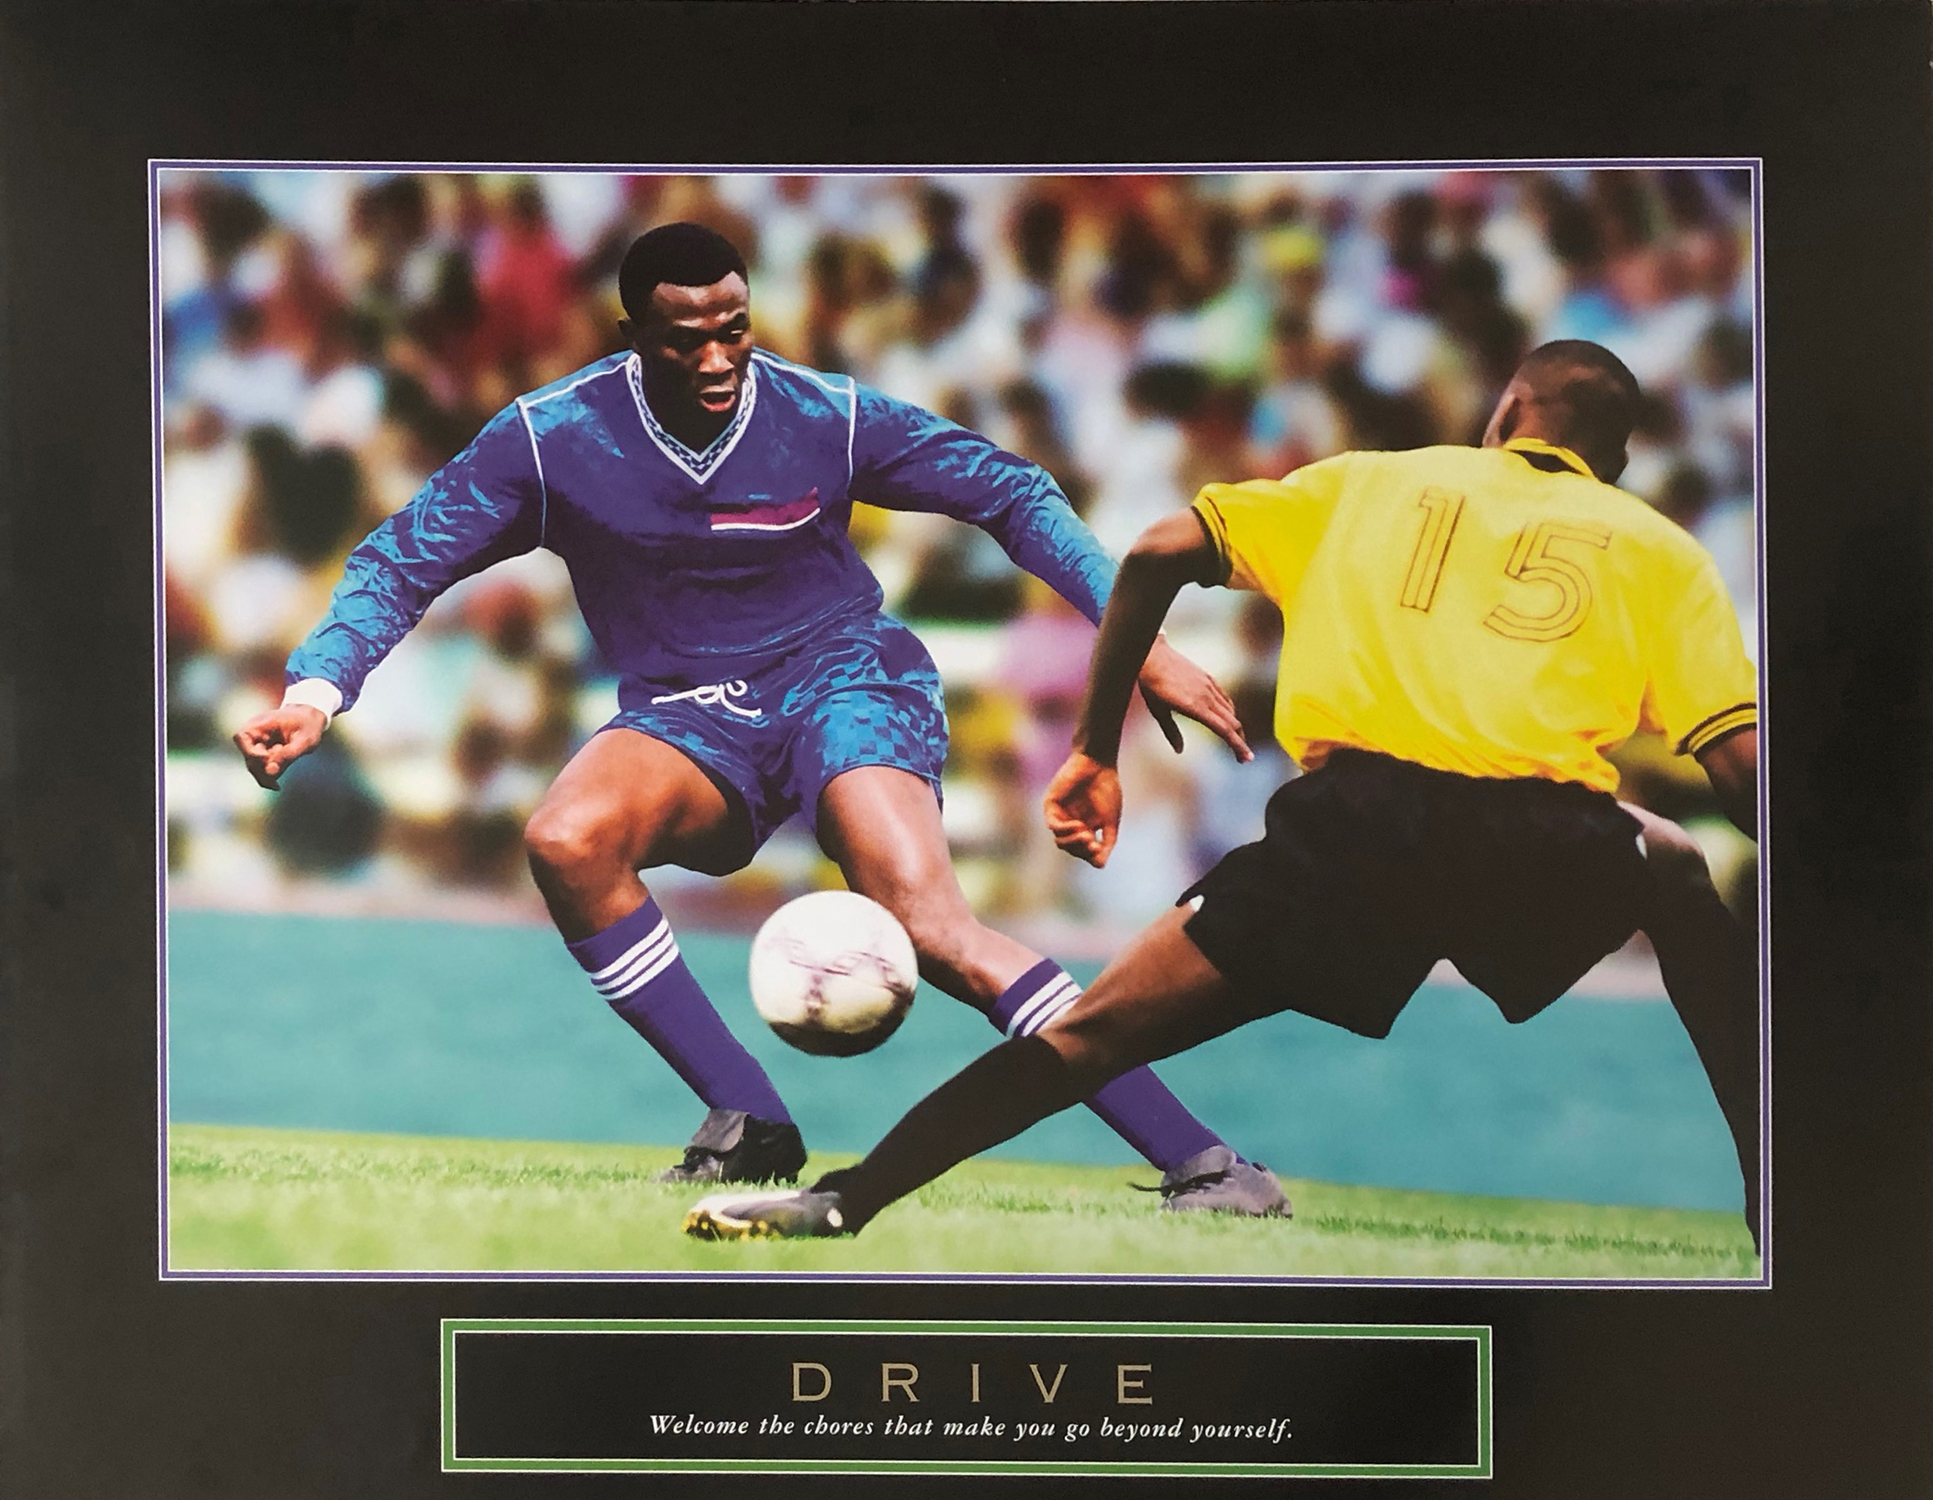 Drive - Soccer